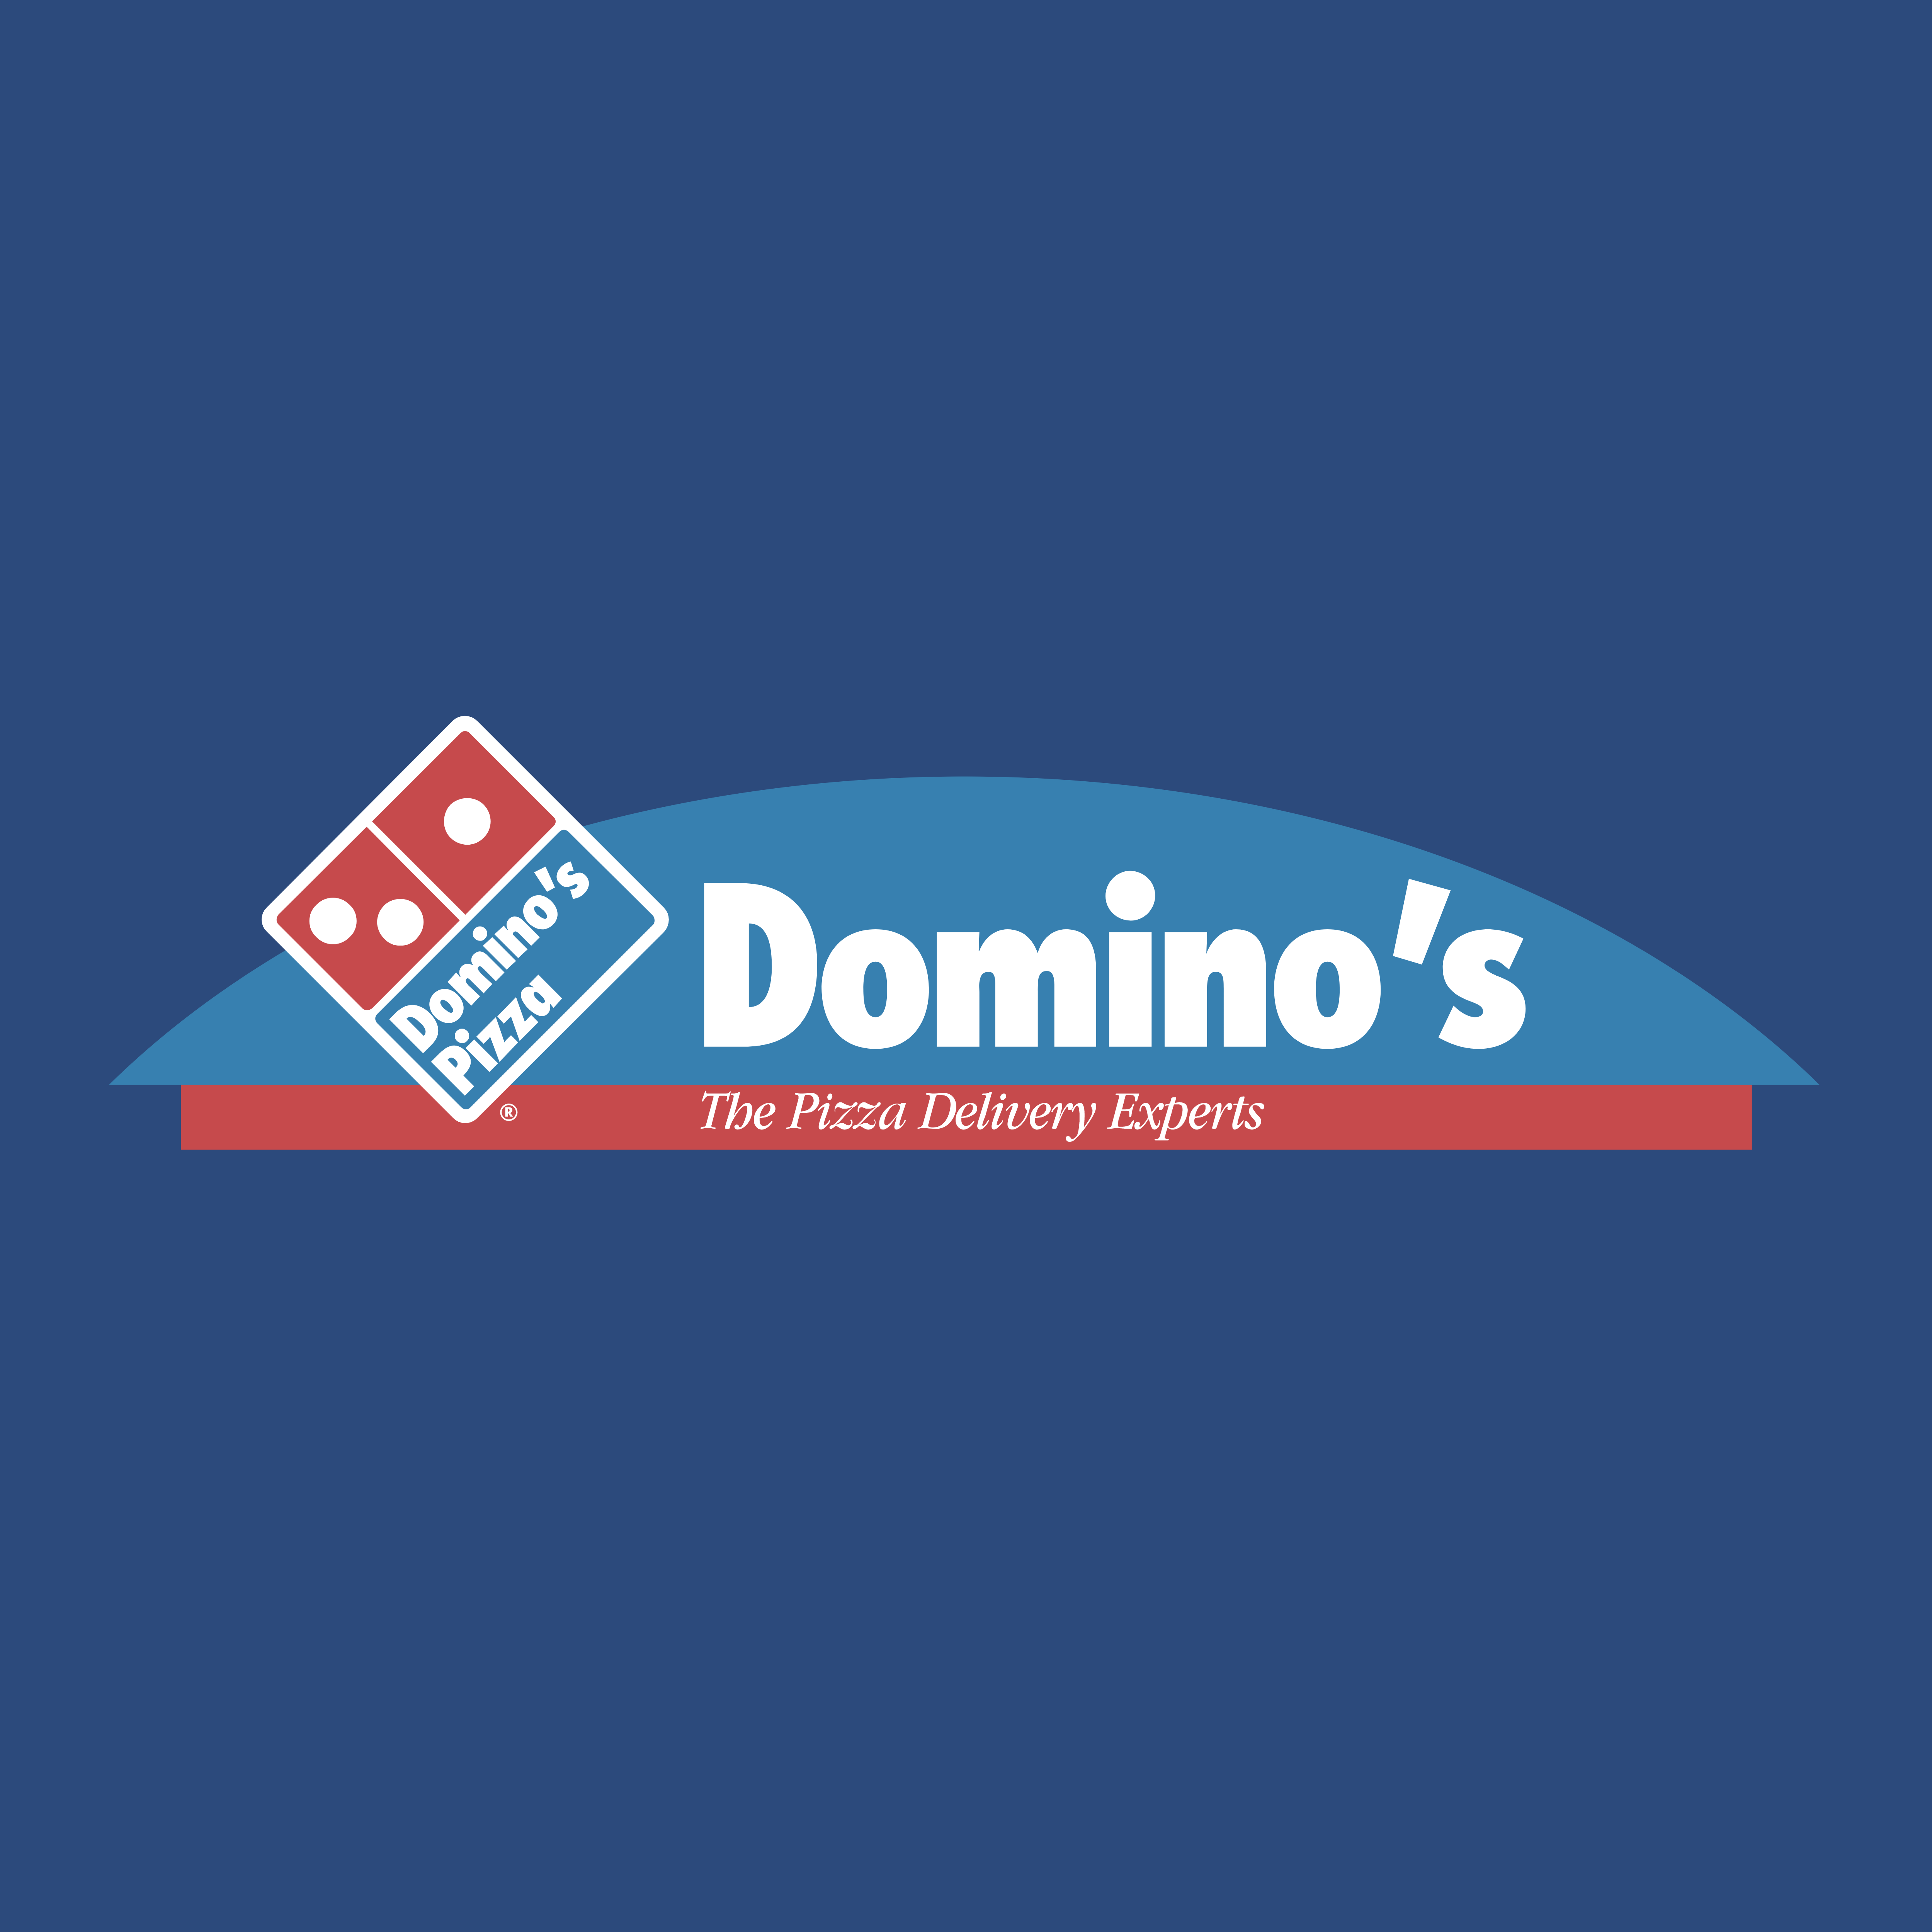 Ооо домино. Доминос пицца логотип. Домино пицца лого. Лого Доминос пицца вектор. Изменения Доминос пицца лого.